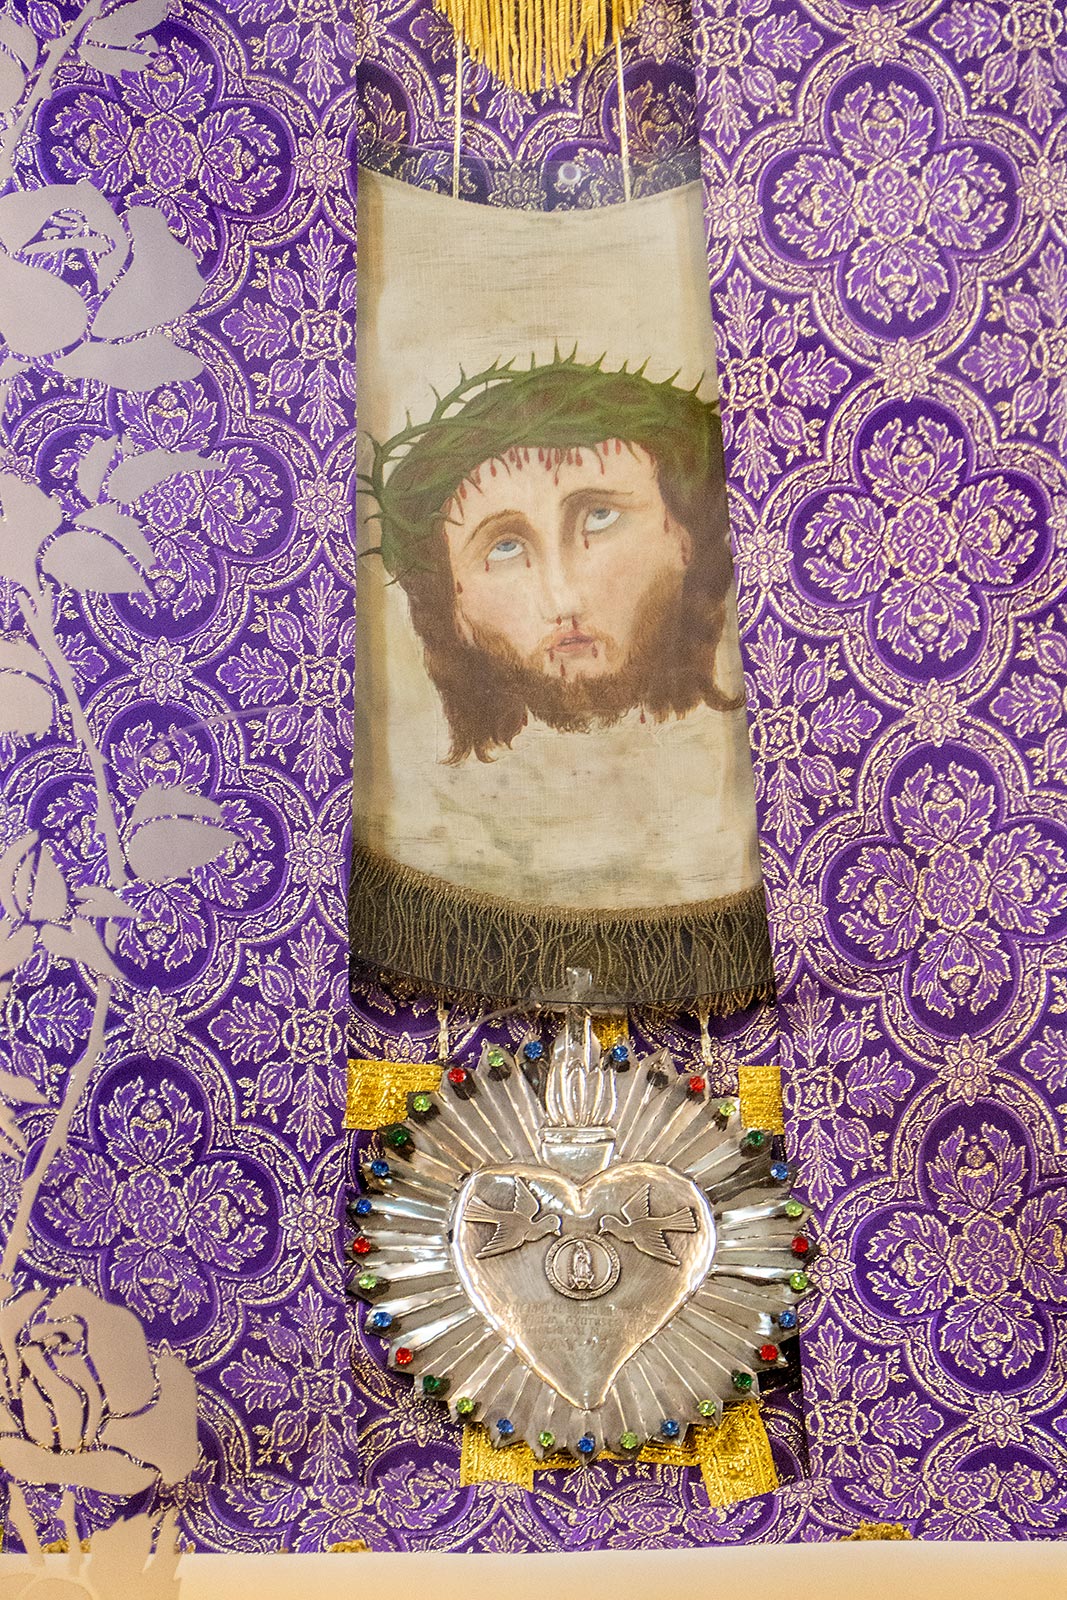 Jesusen irudi miragarria oihal gainean, Santuario del Divino Rostroko aldare nagusia